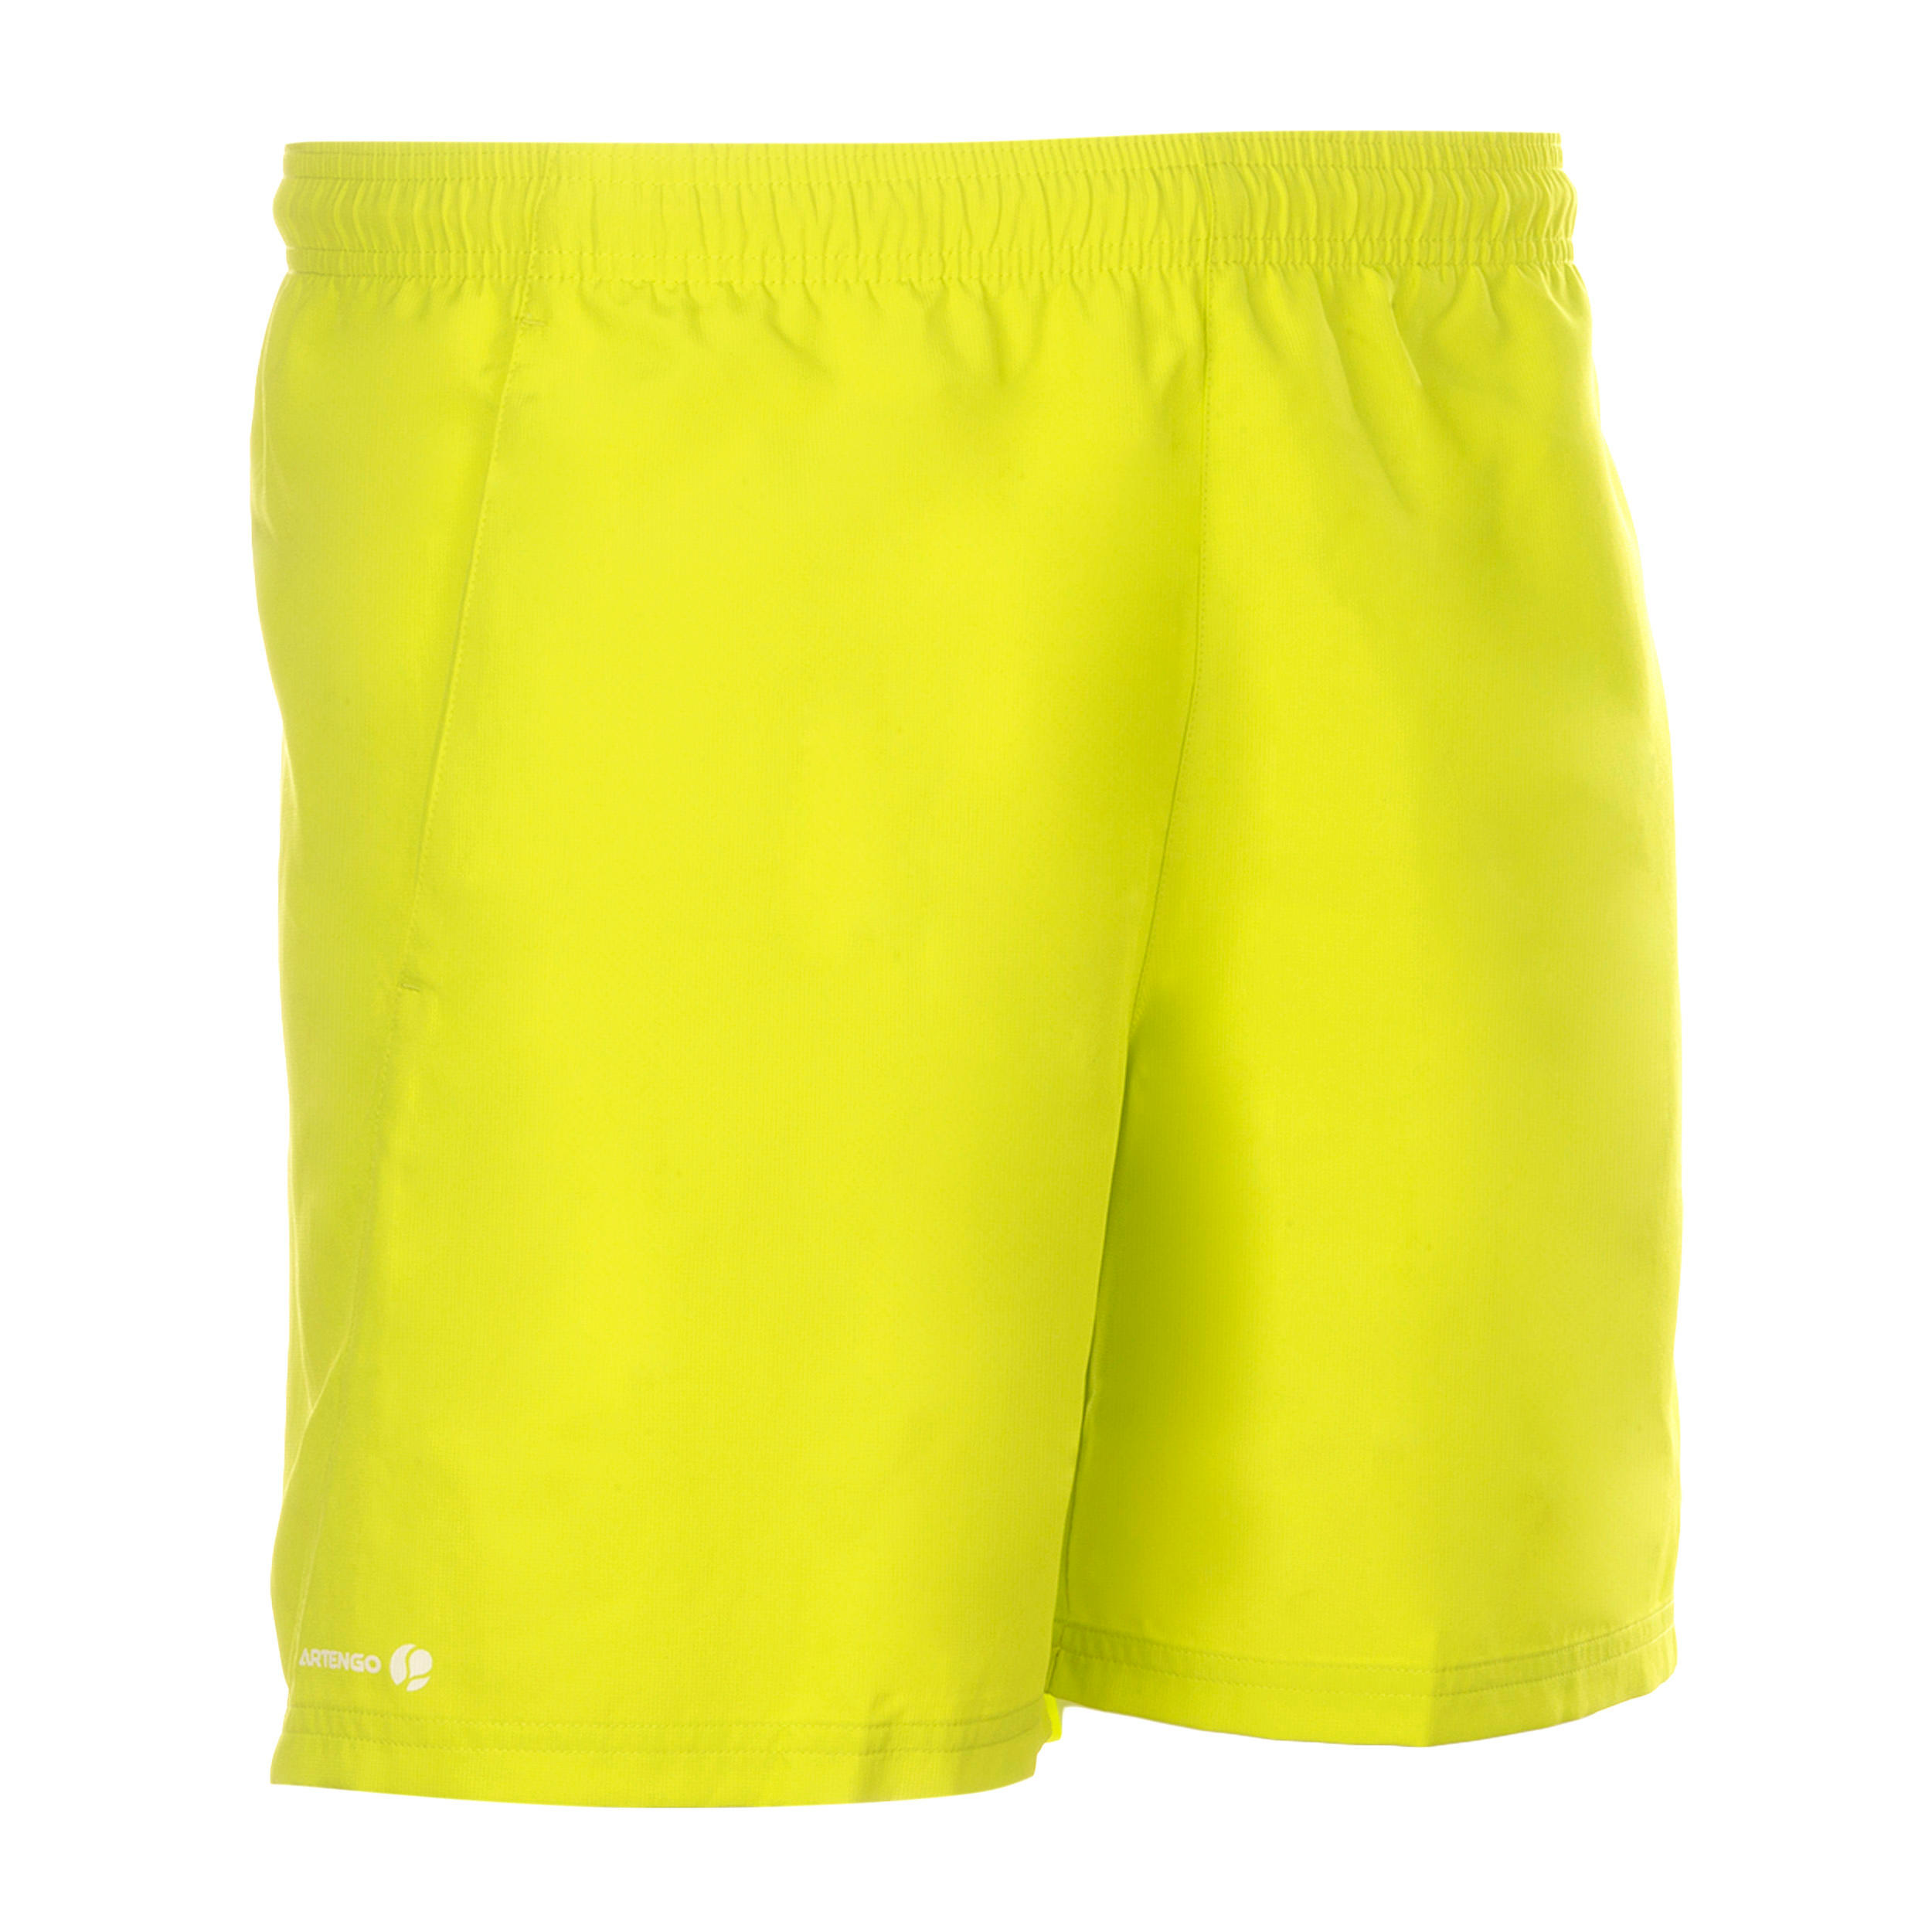 ARTENGO Essential 100 Padel Tennis Badminton Squash Table Tennis Shorts - Yellow